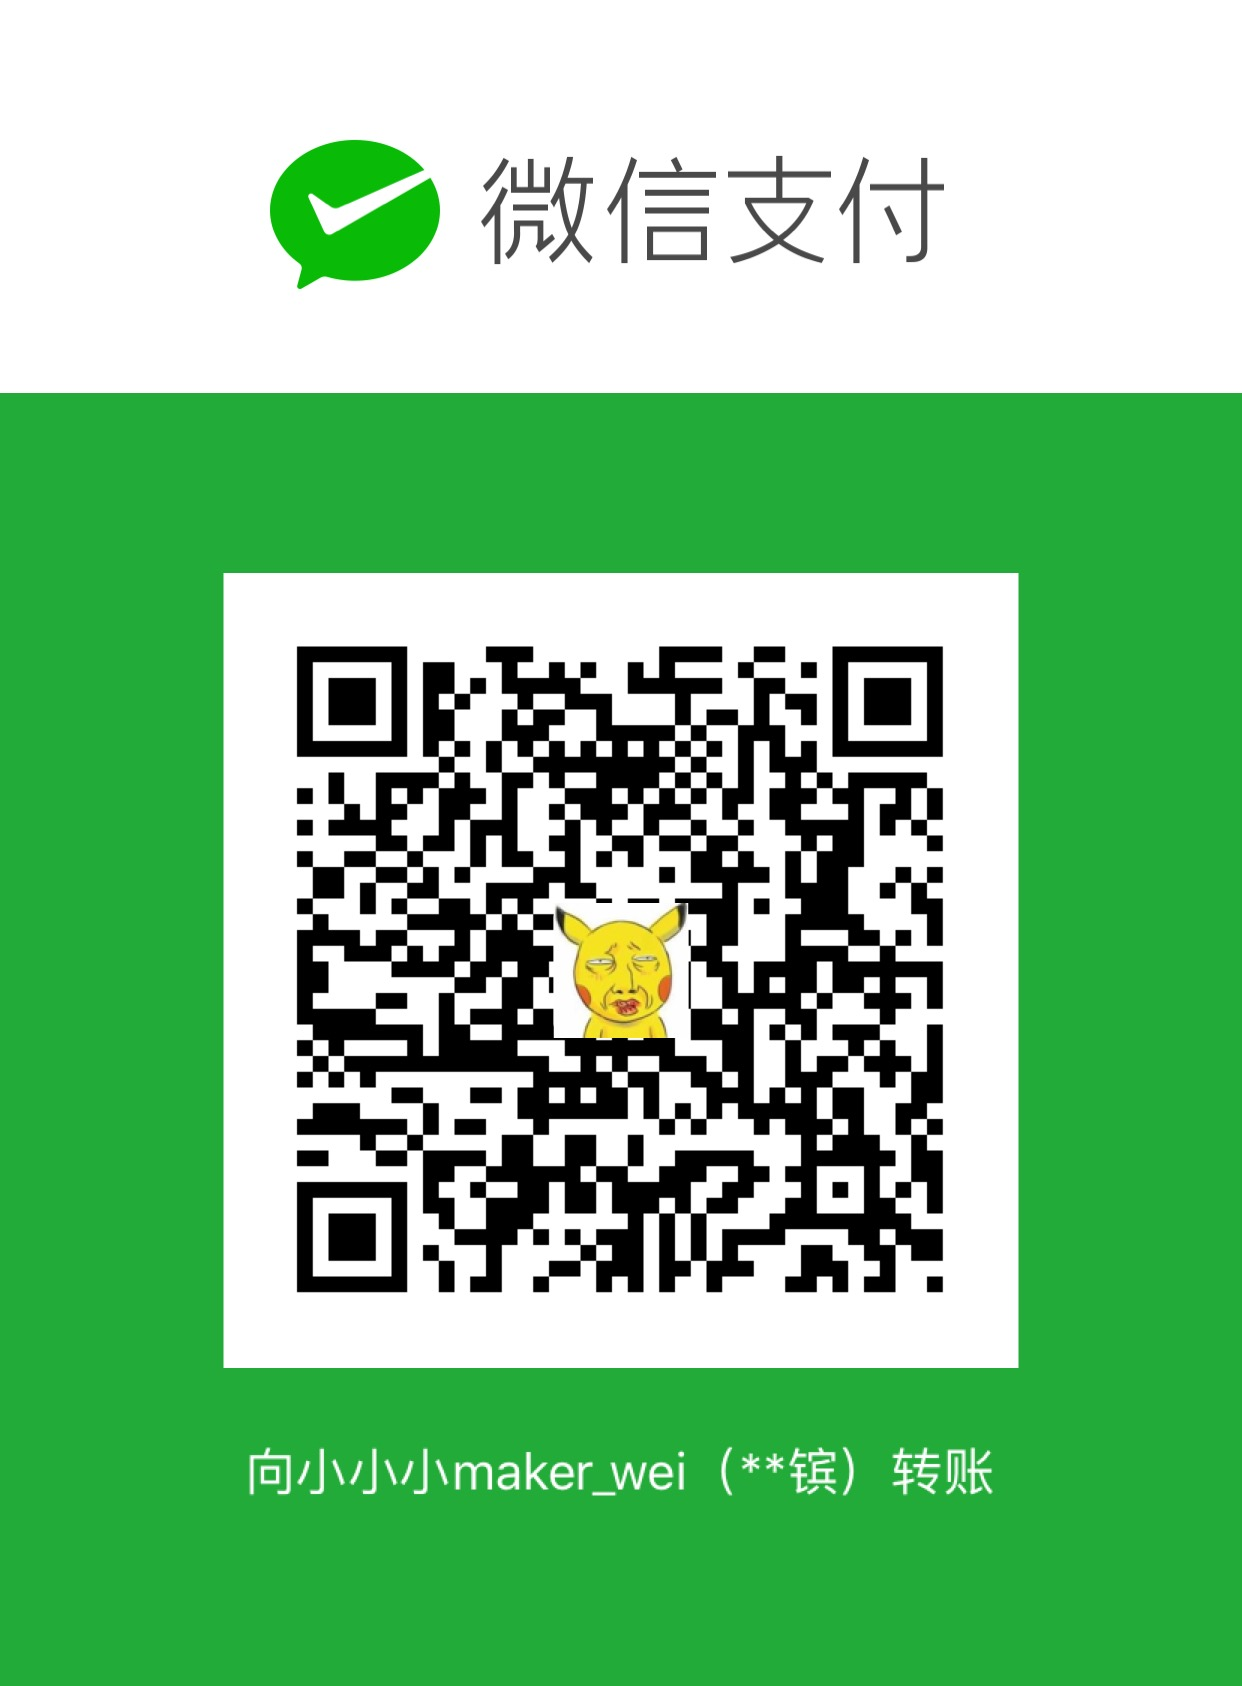 小小小maker_wei WeChat Pay